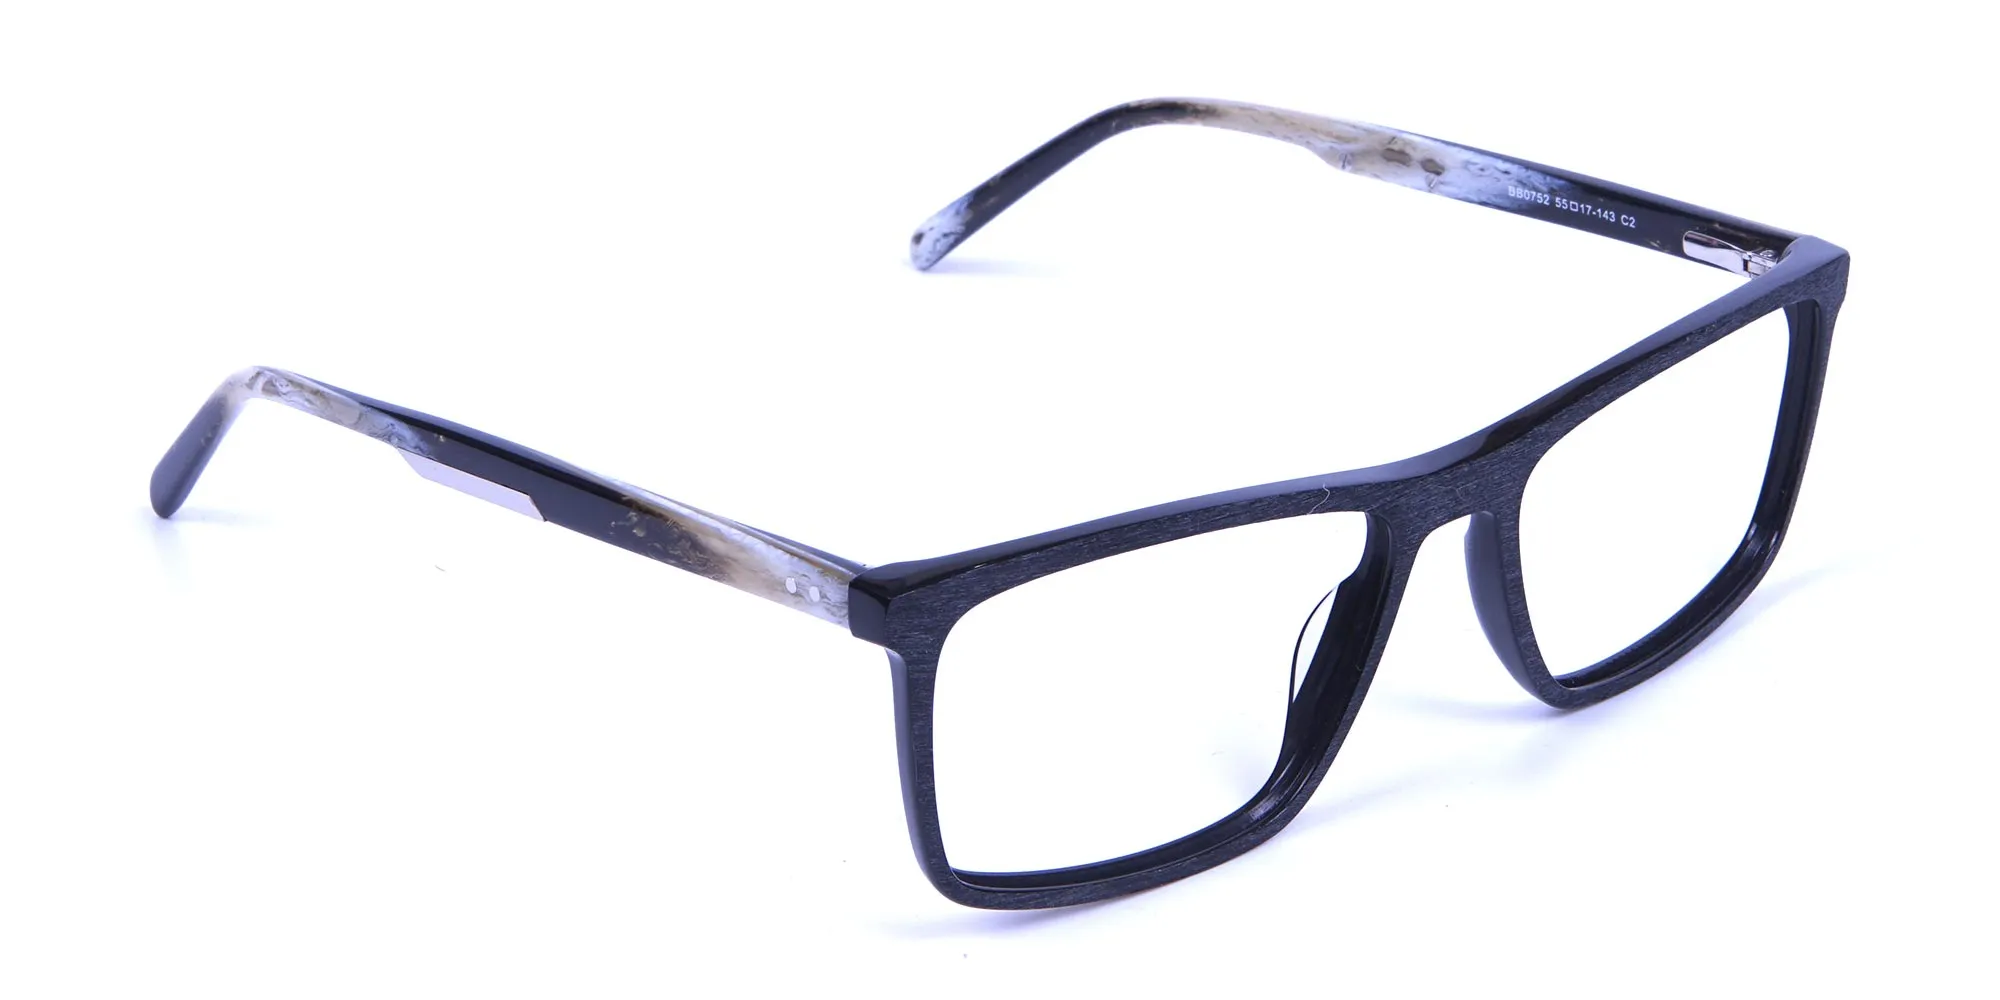 Wooden Texture Black Rectangular Glasses - 1